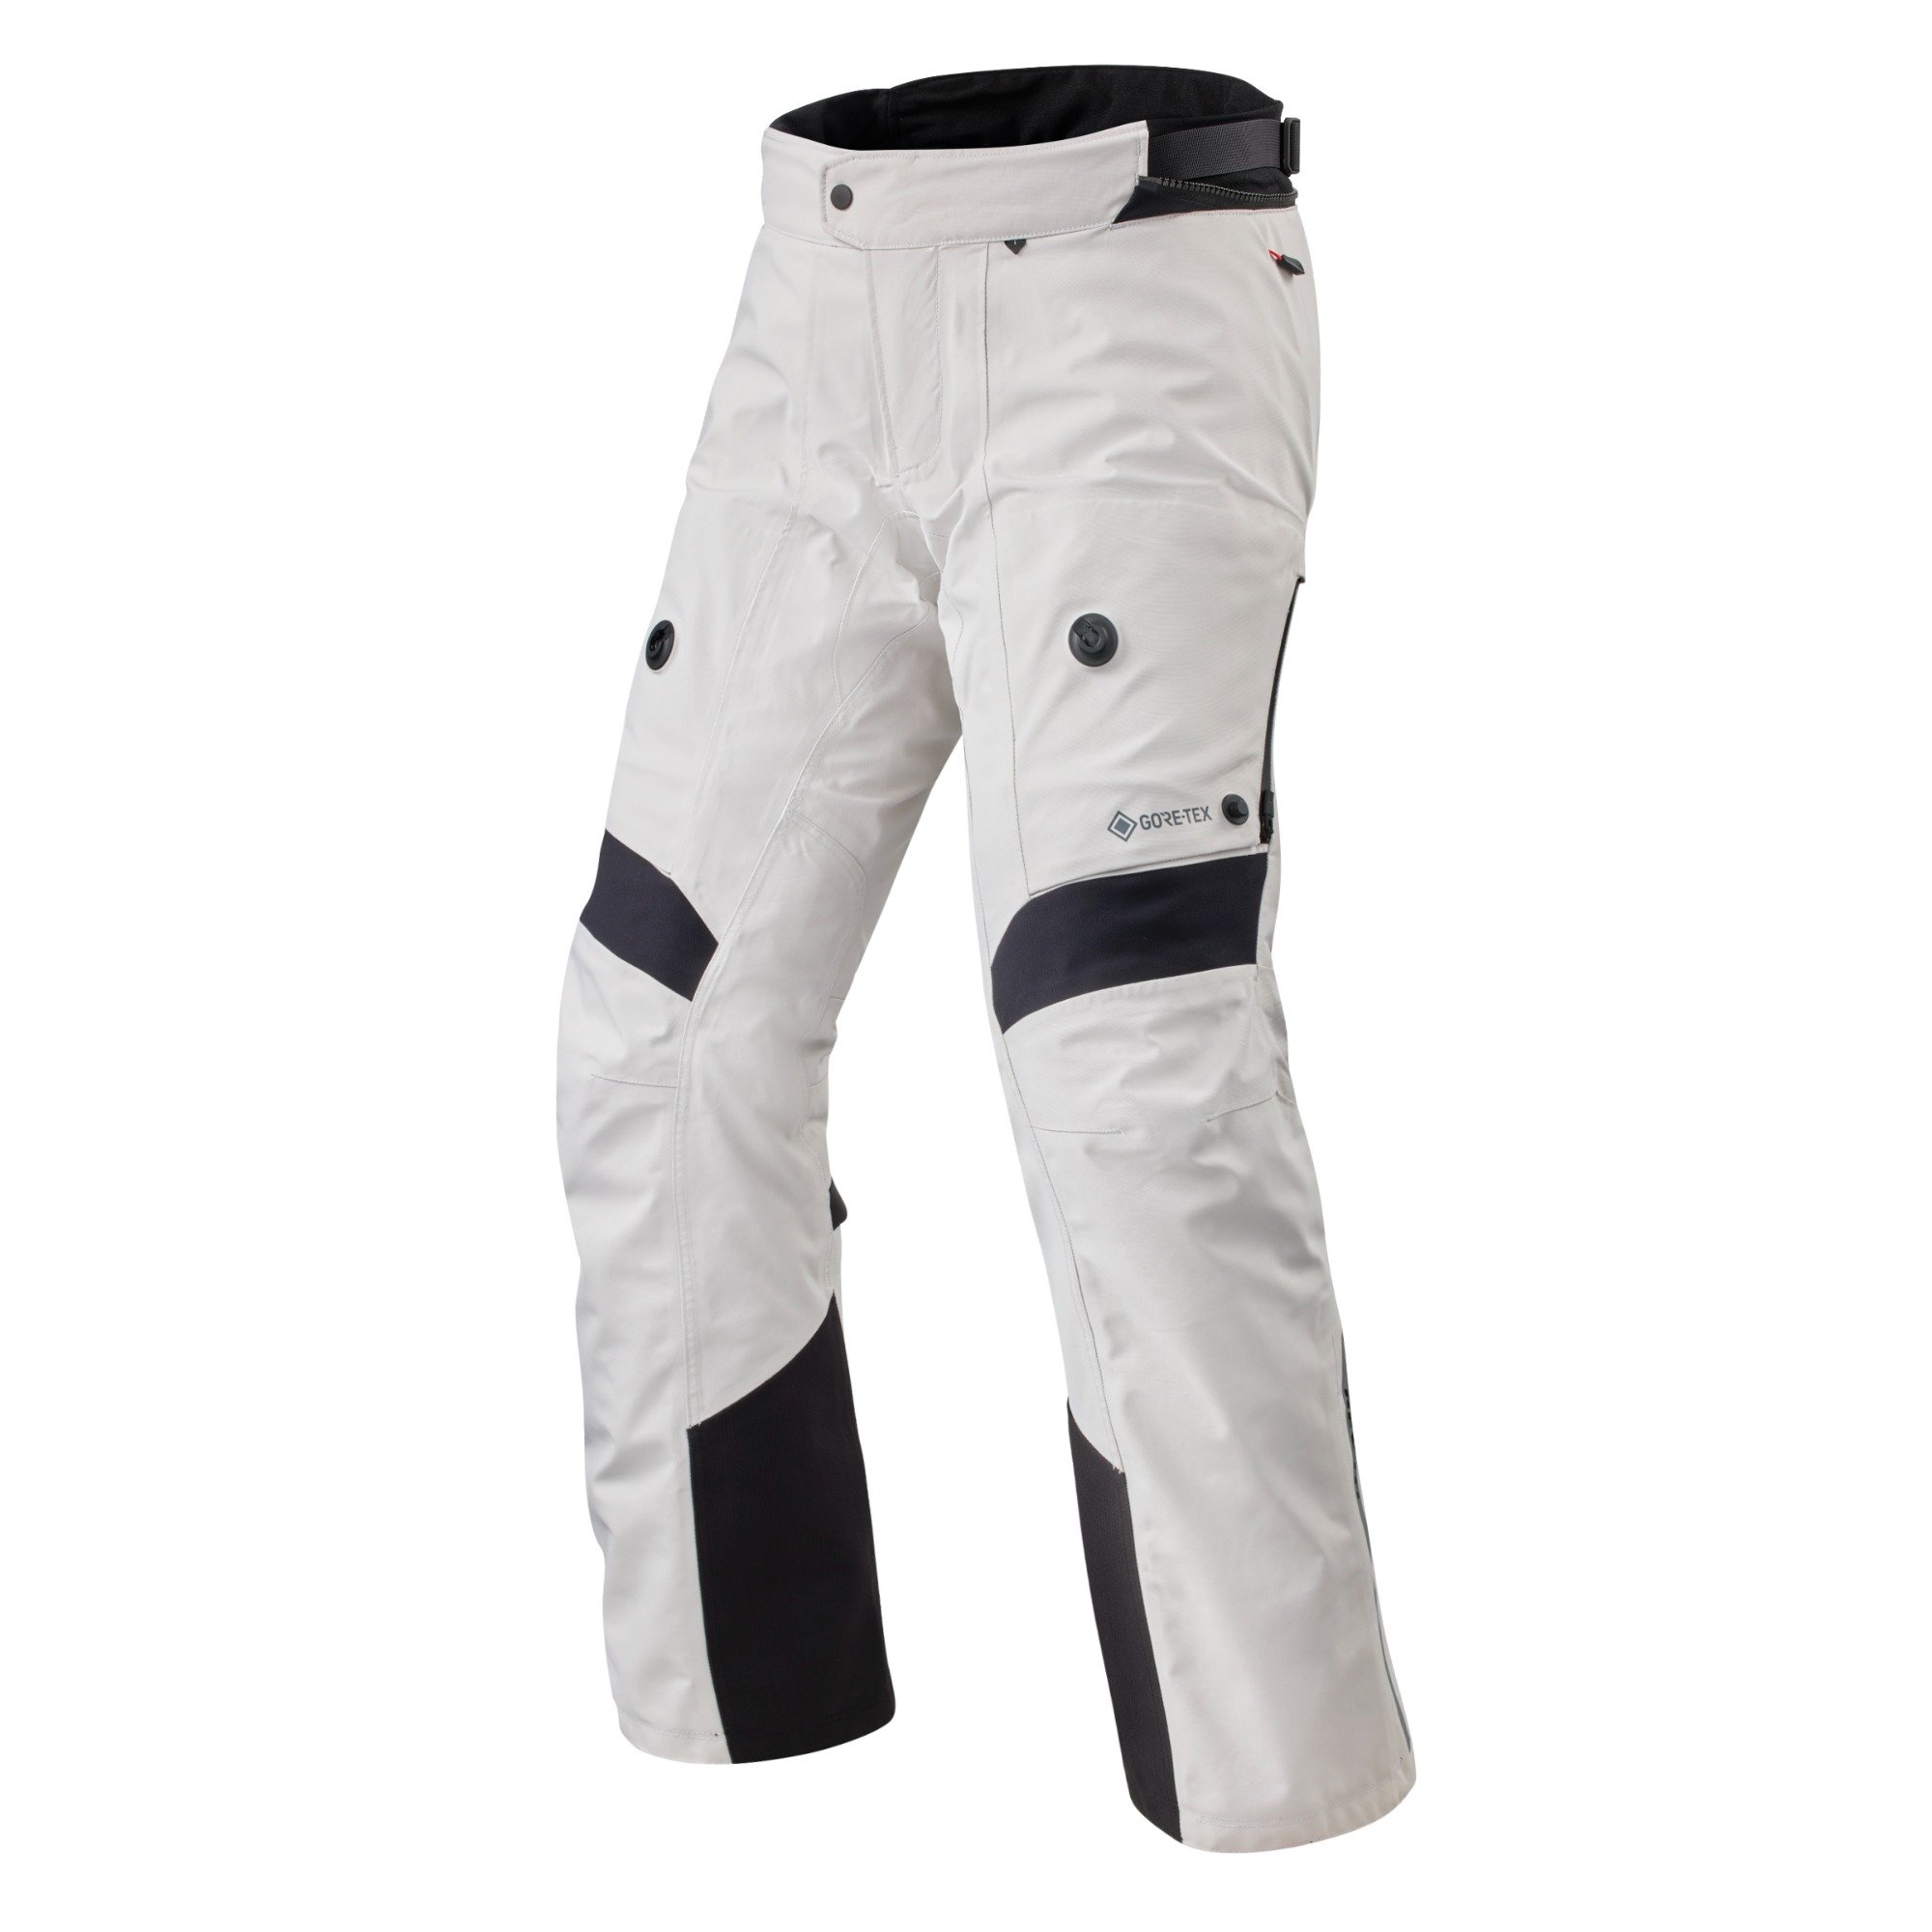 Image of REV'IT! Pants Poseidon 3 GTX Silver Black Short Motorcycle Pants Talla L